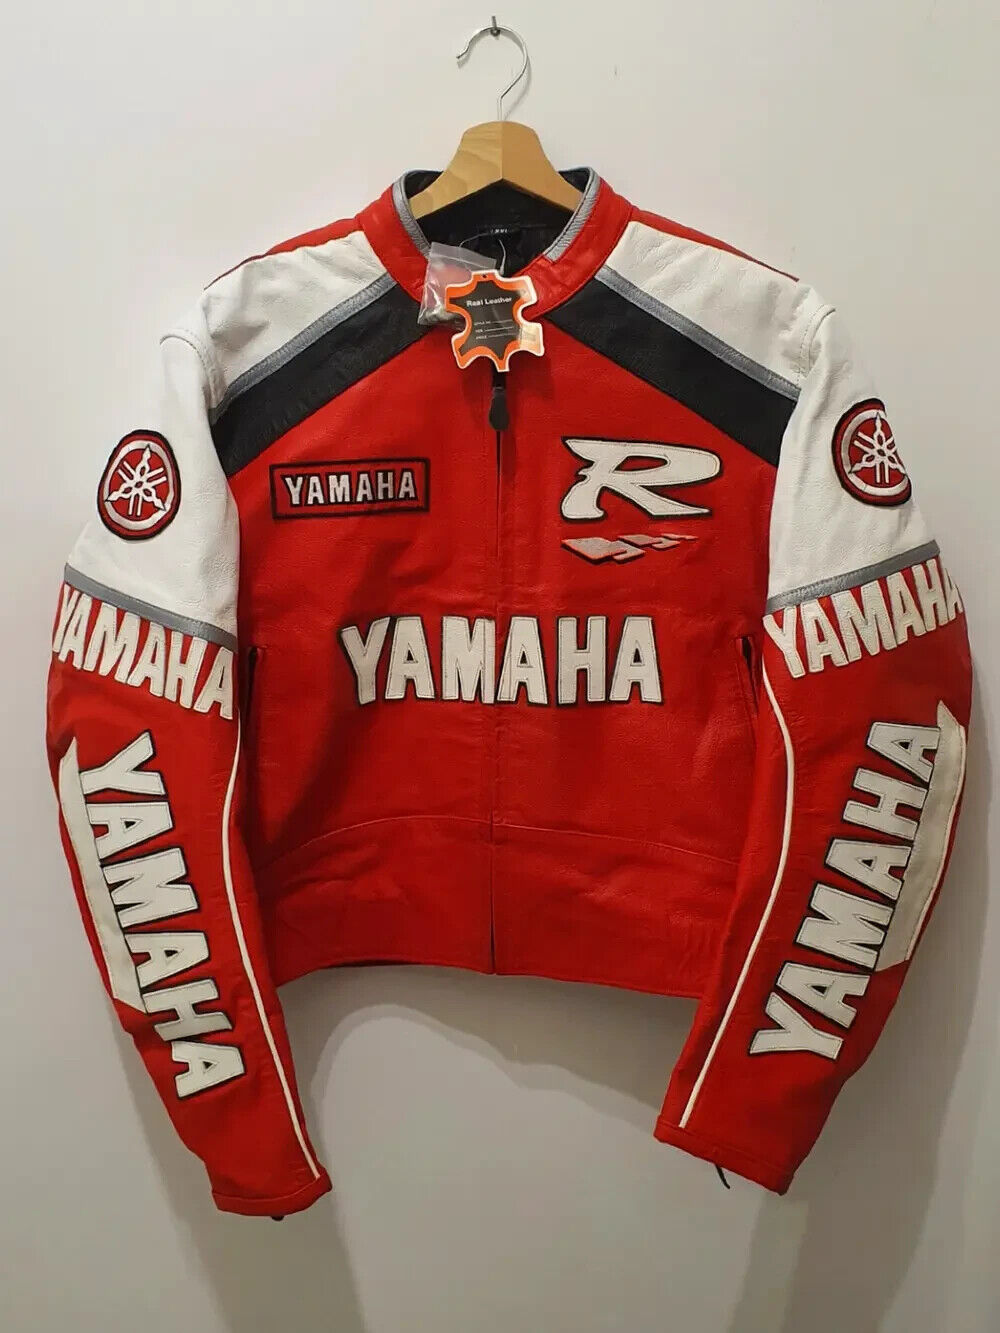 Yamaha Men's Racing Motorbike Leather Jacket Yamaha Motorcycle Biker Jacket